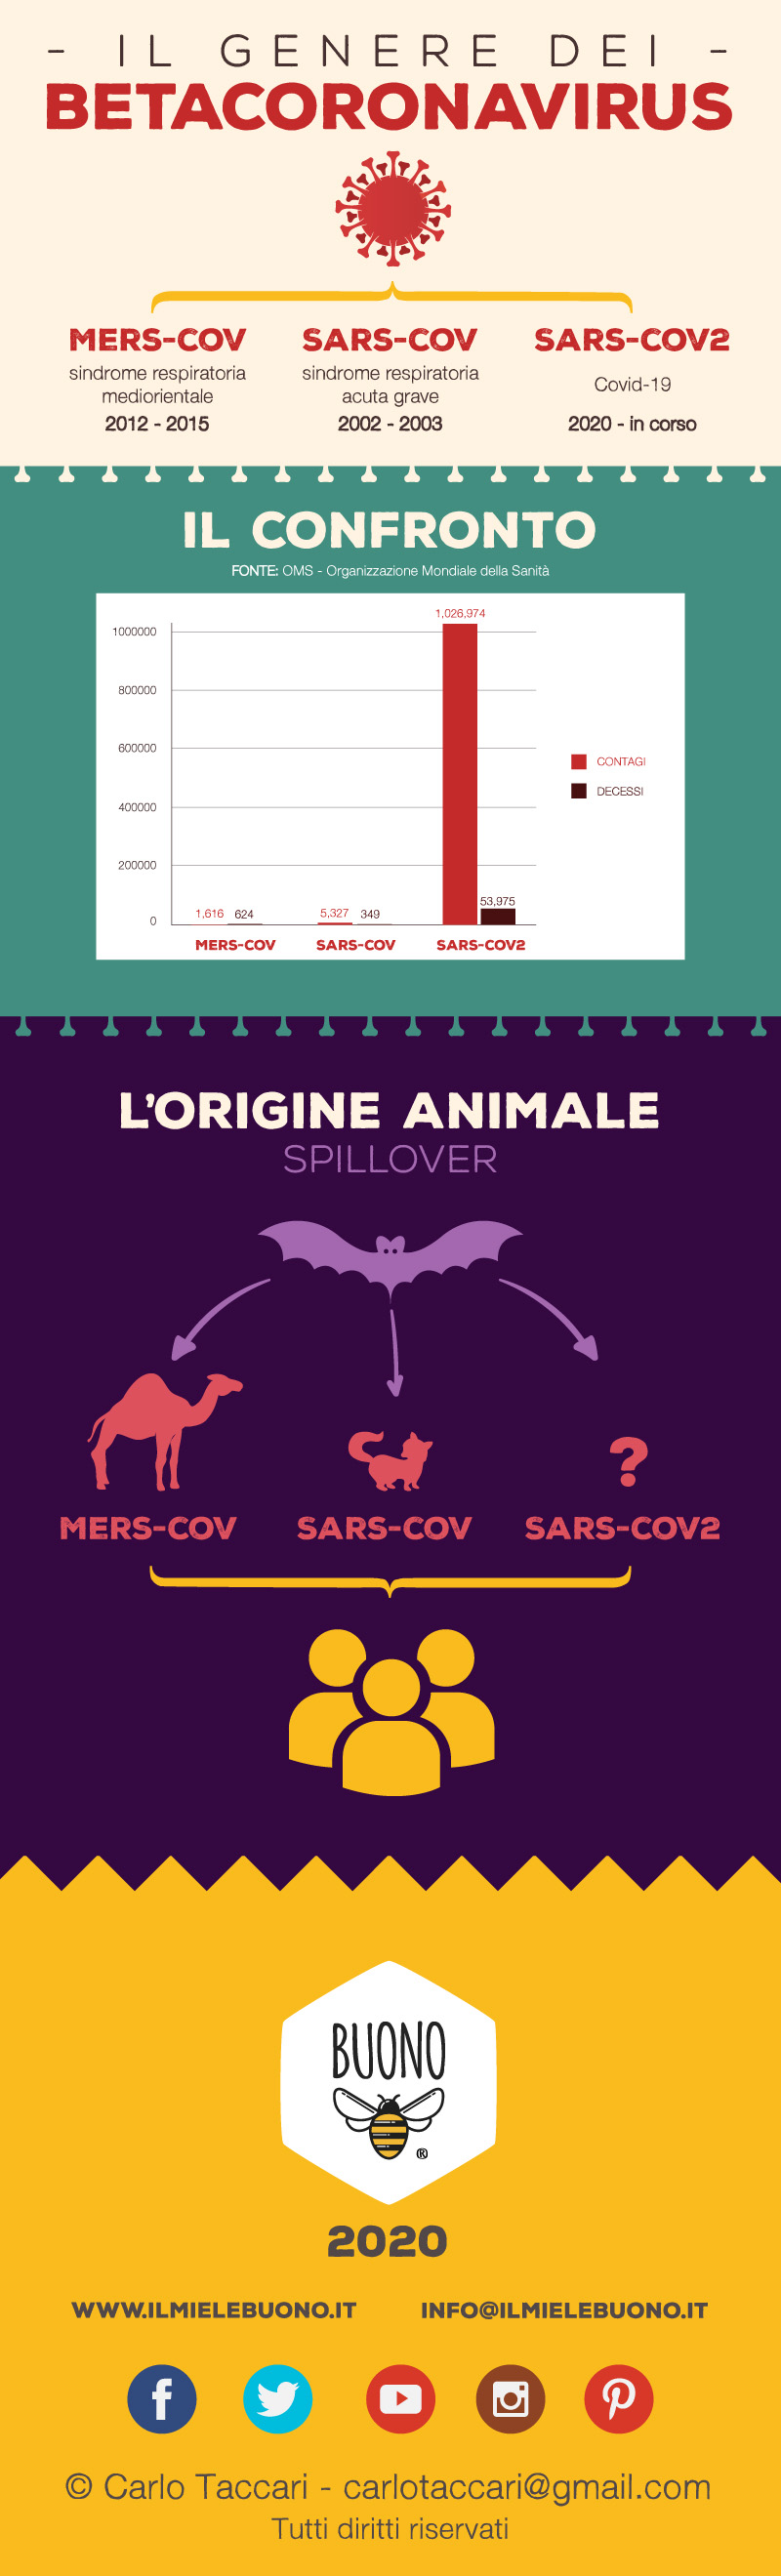 Coronavirus infografica © Carlo Taccari/BUONO